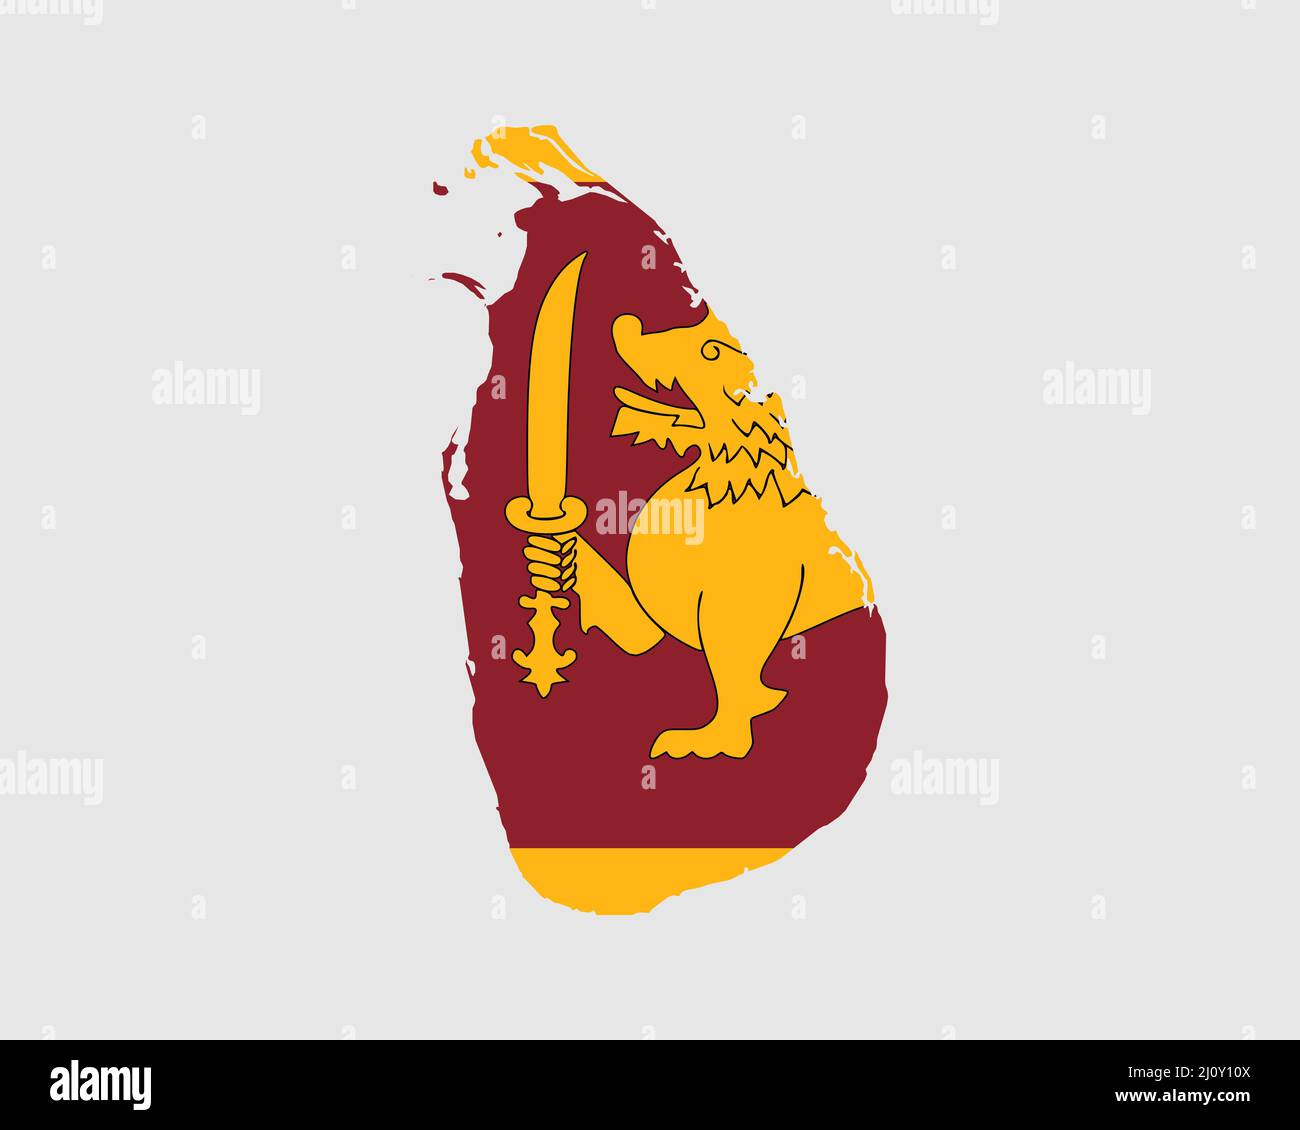 Sri Lanka Flag Map. Map of the Democratic Socialist Republic of Sri Lanka with the Sri Lankan country banner. Vector Illustration. Stock Vector